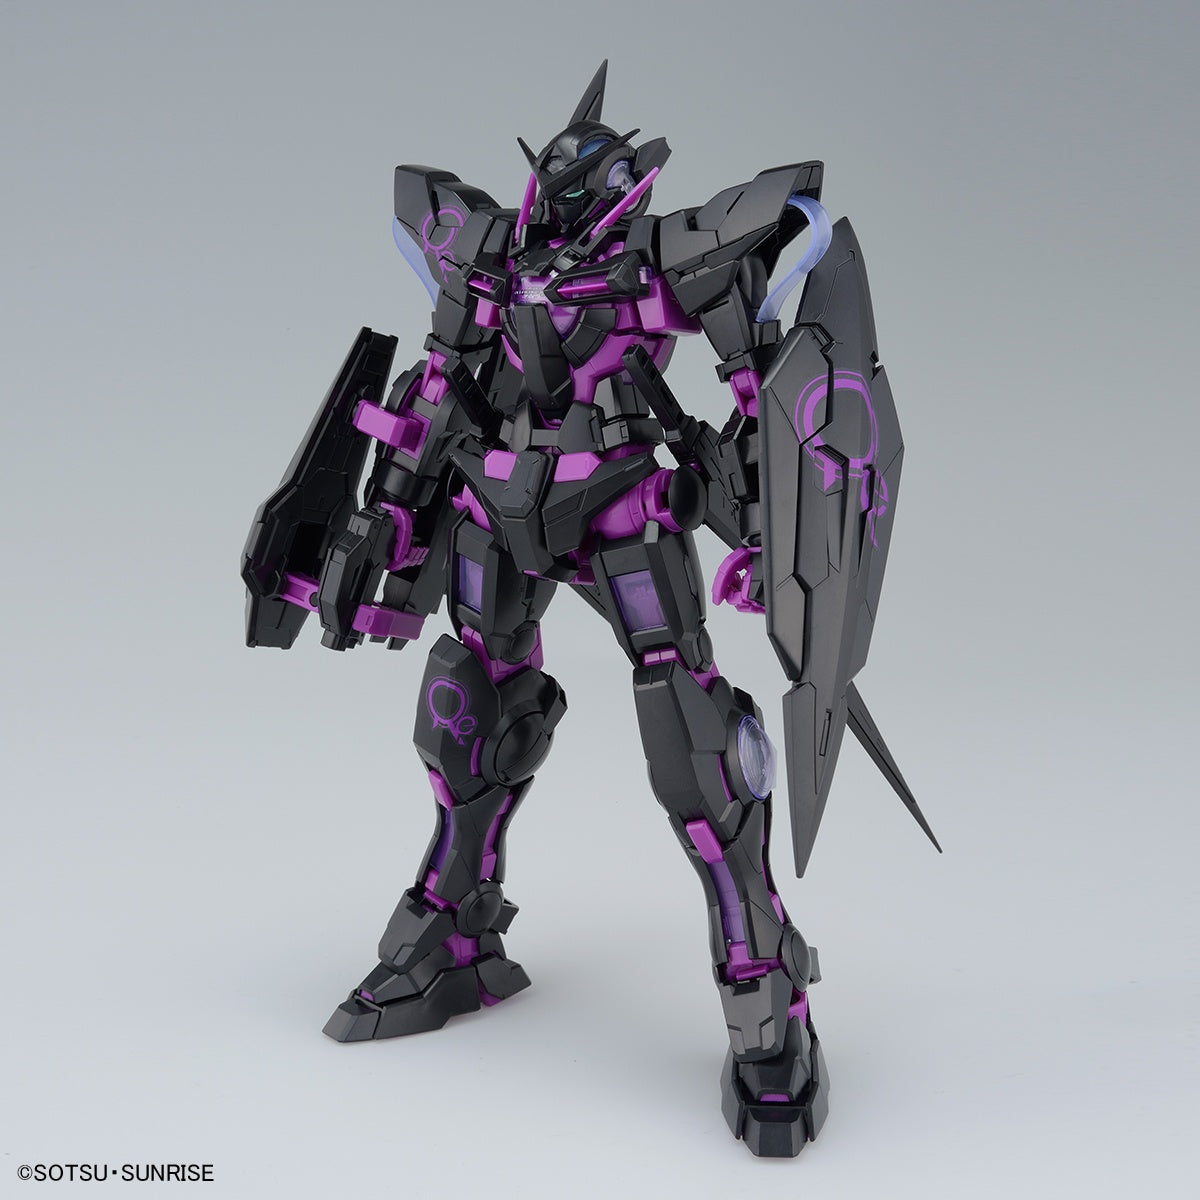 Bandai Ecopla Limited Item MG 1/100 Gundam Exia [Recirculation Color/Neon Purple]